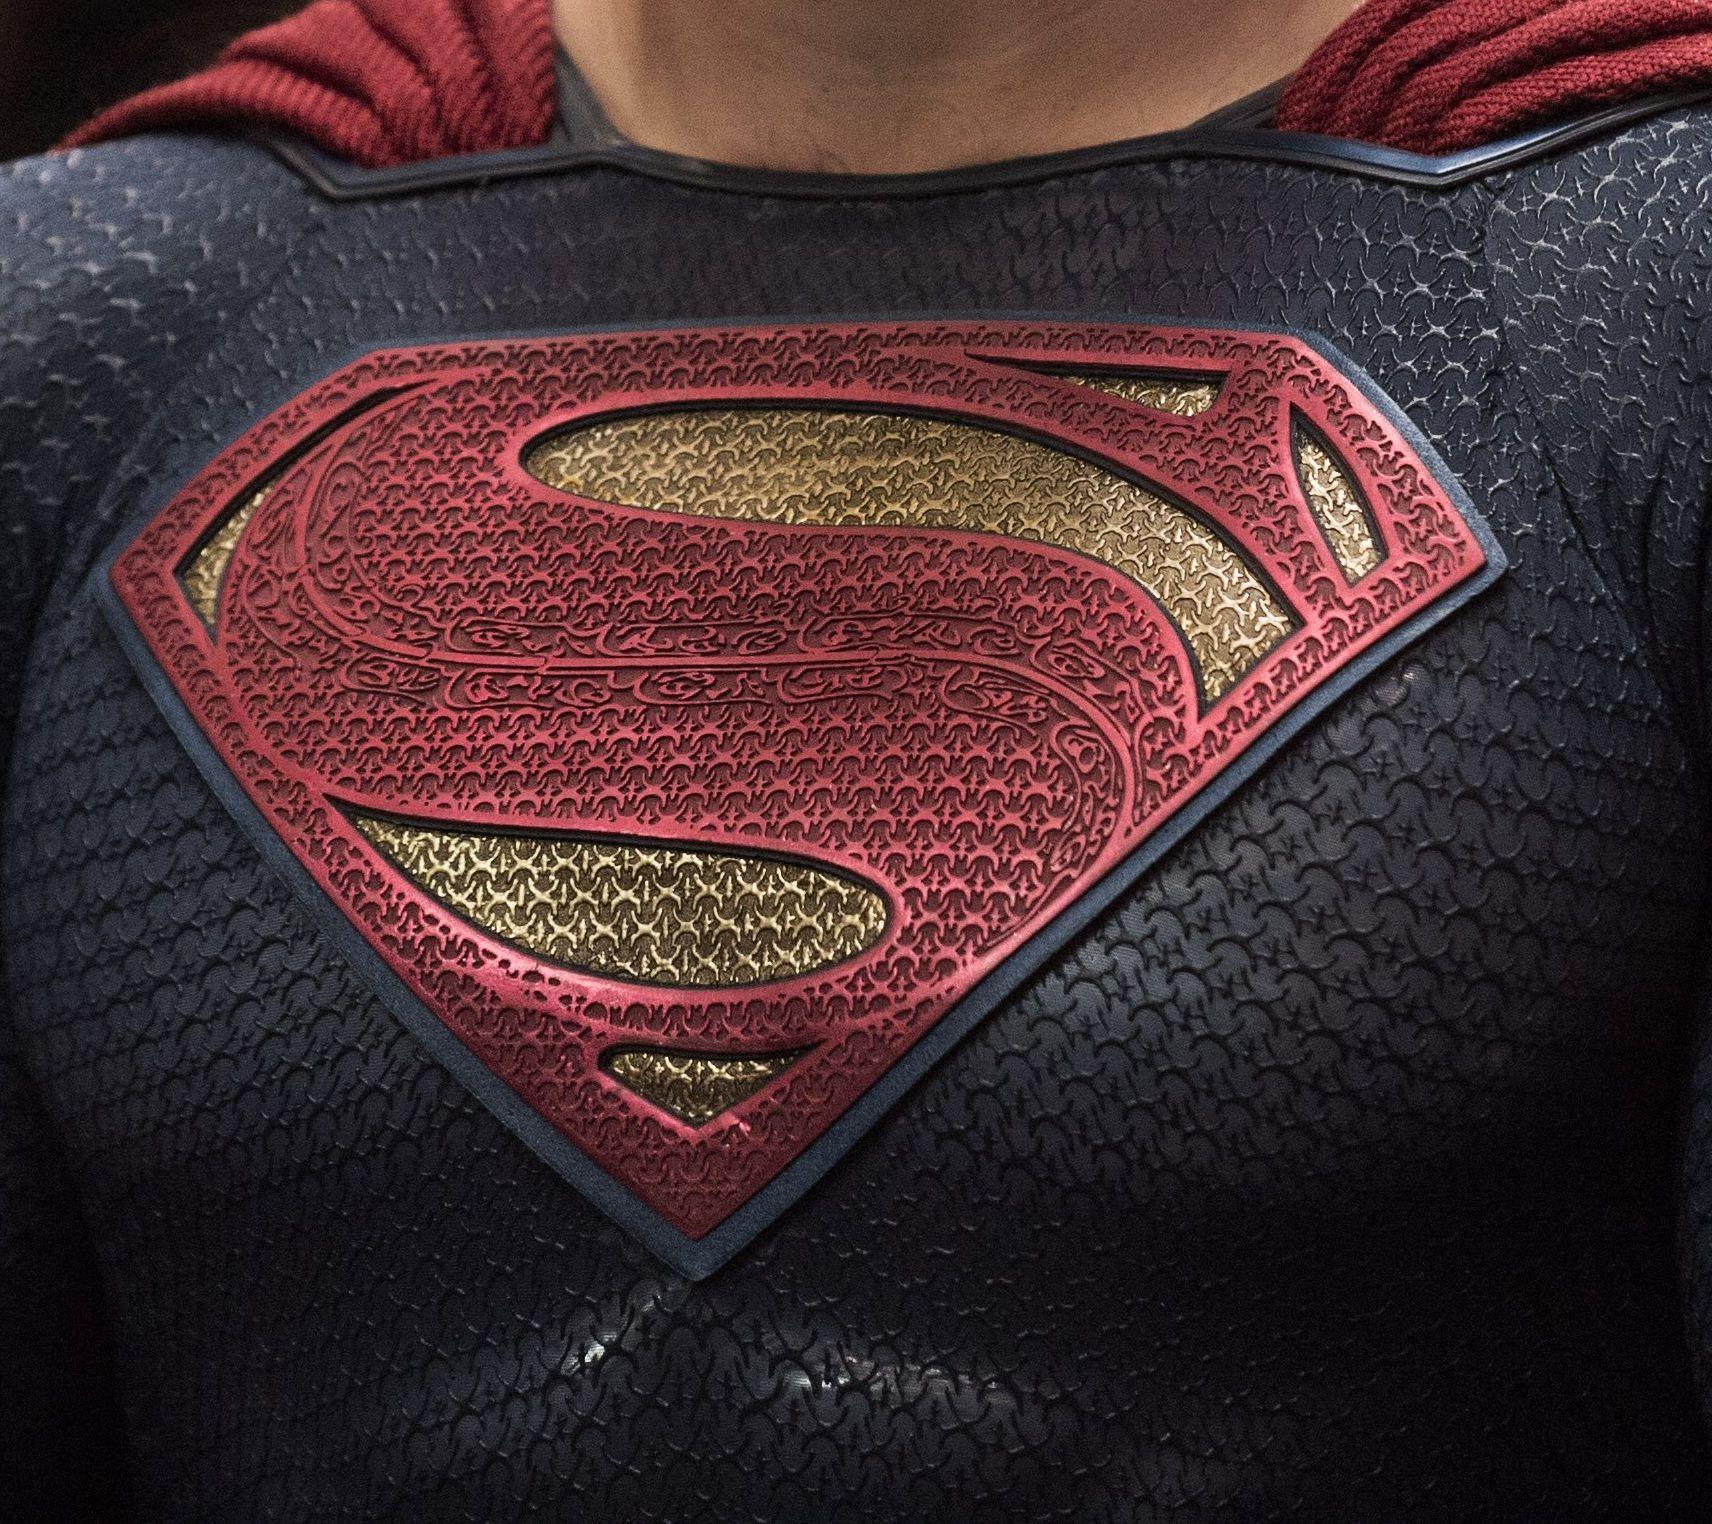 Kryptonian Logo - Superman's shield in Batman v Superman which features a Joseph ...